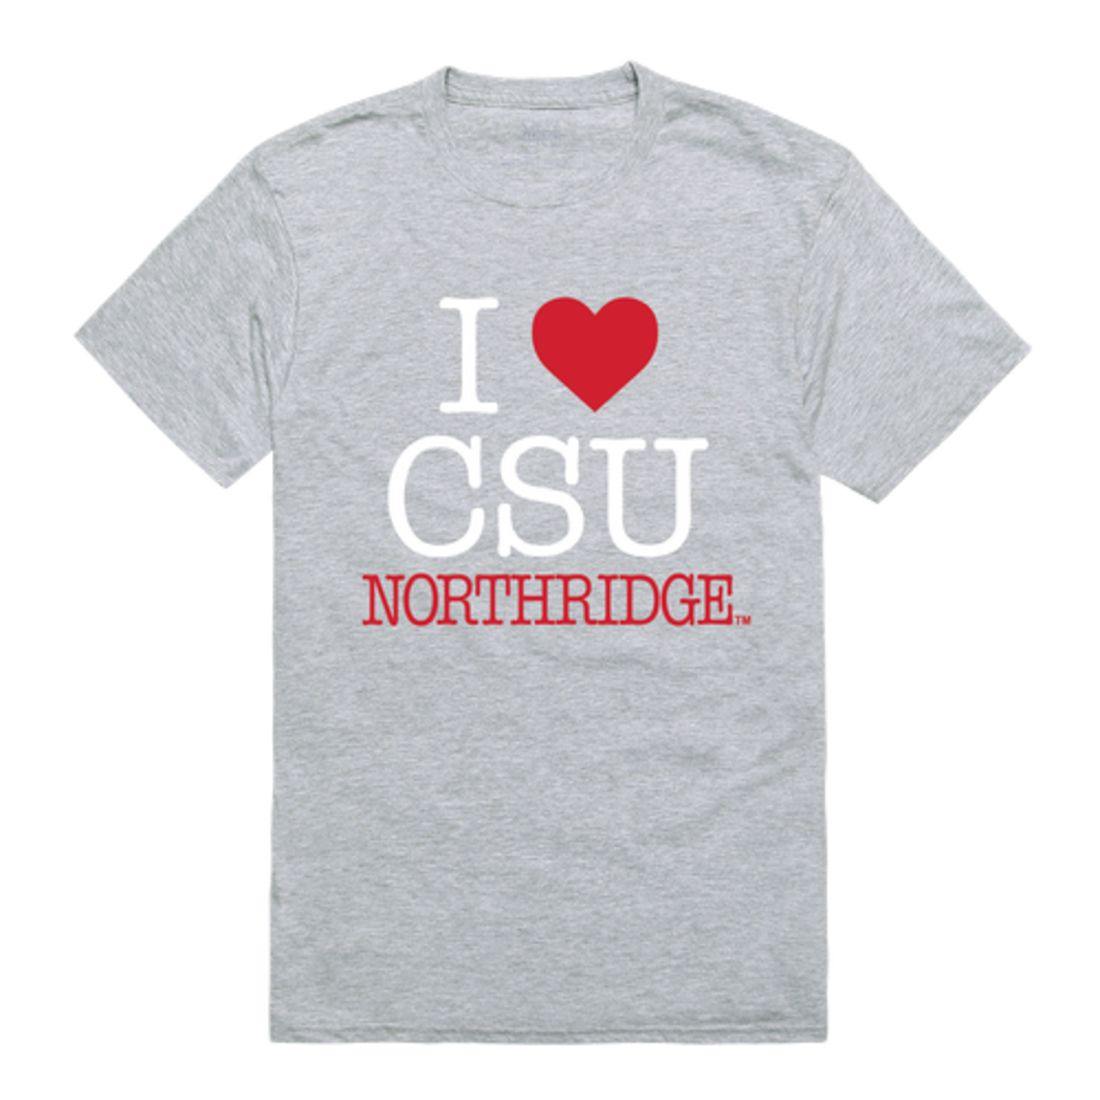 I Love CSUN California State University Northridge Matadors T-Shirt-Campus-Wardrobe